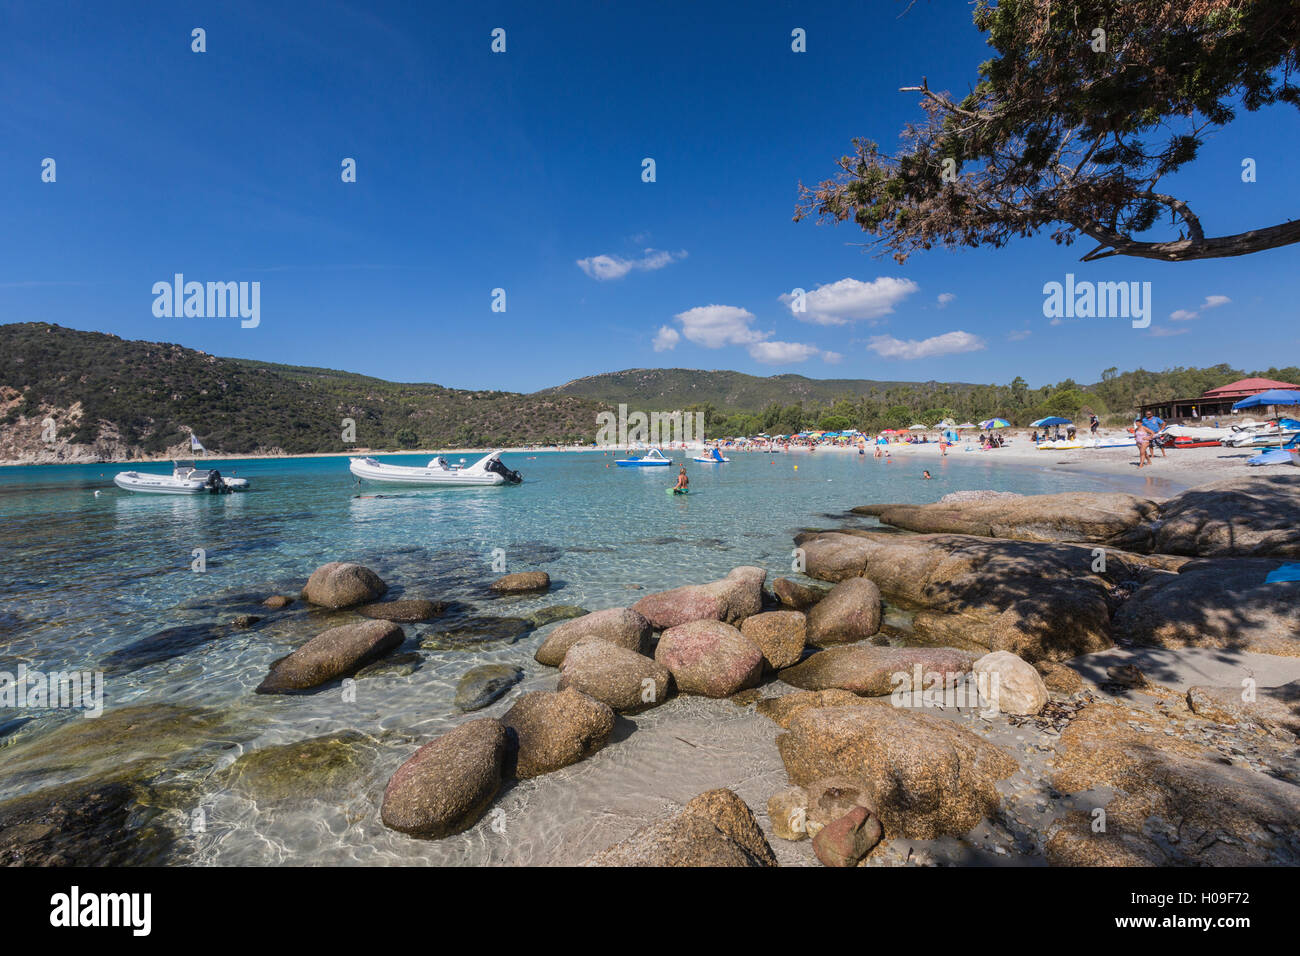 Boats in the turquoise sea surround the sandy beach of Cala Pira Castiadas, Cagliari, Sardinia, Italy, Mediterranean, Europe Stock Photo